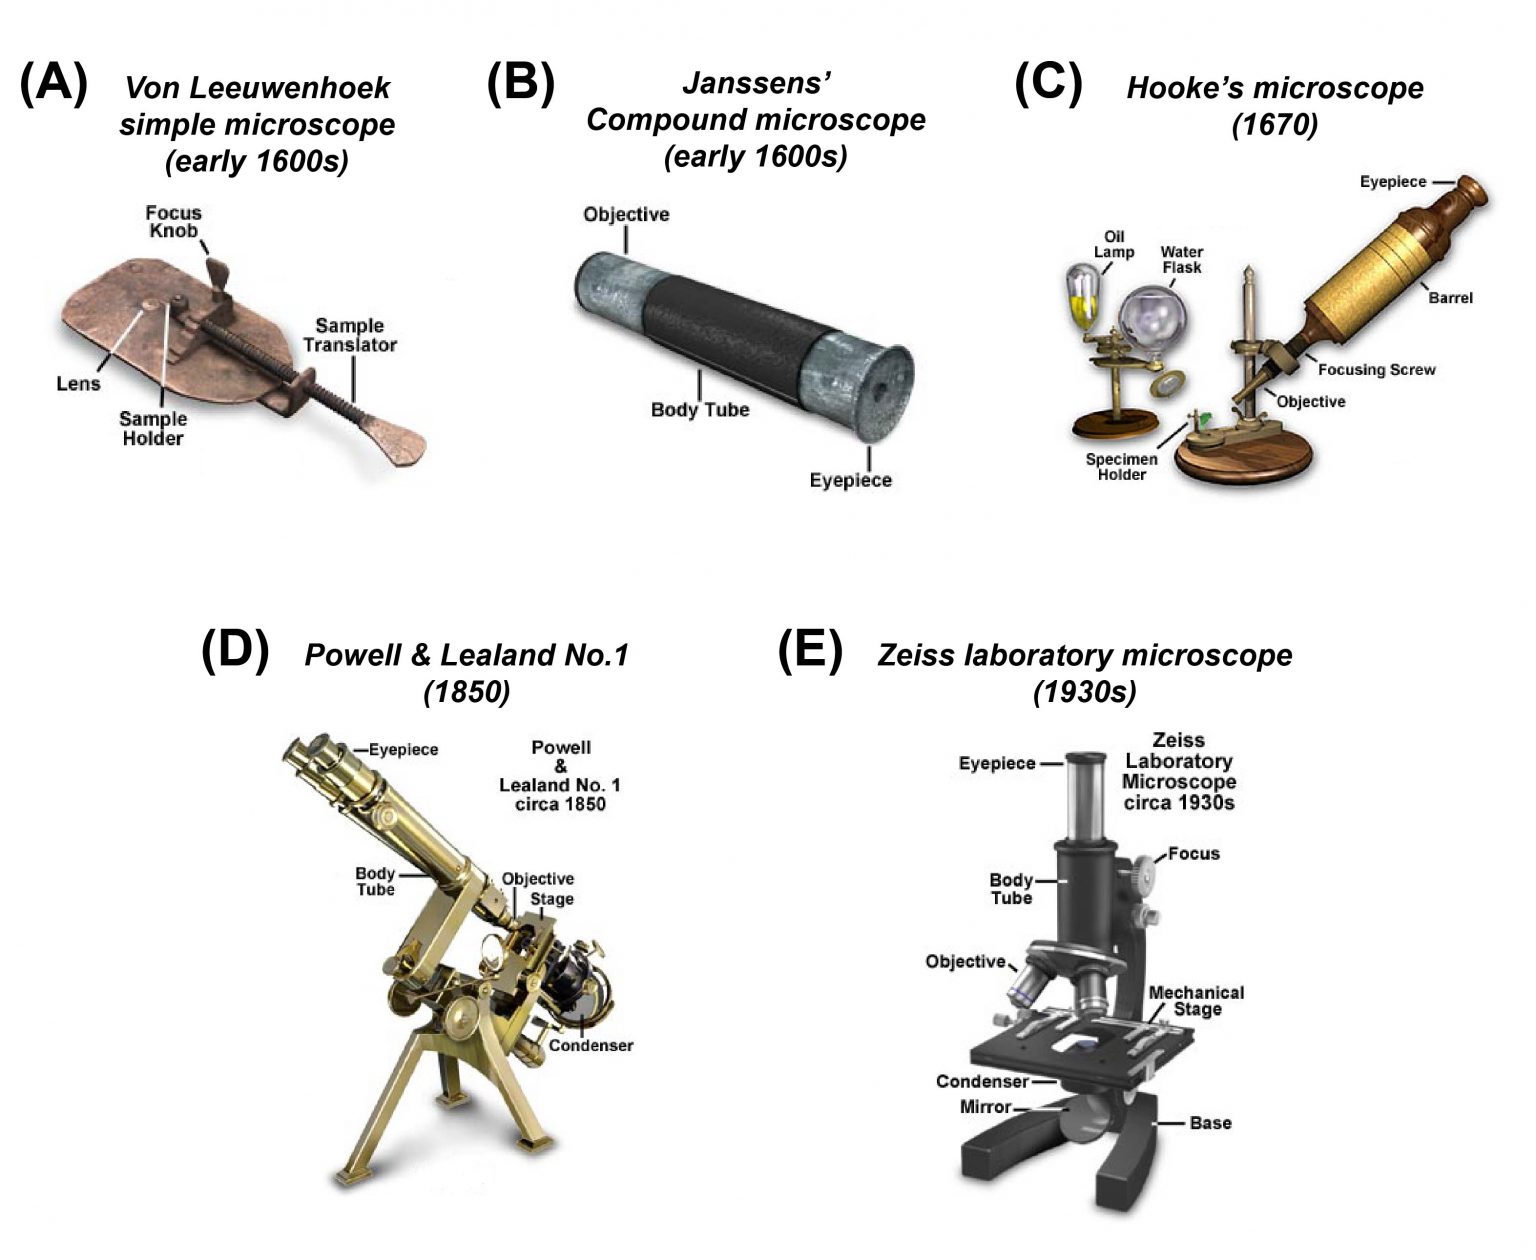 history of microscope presentation